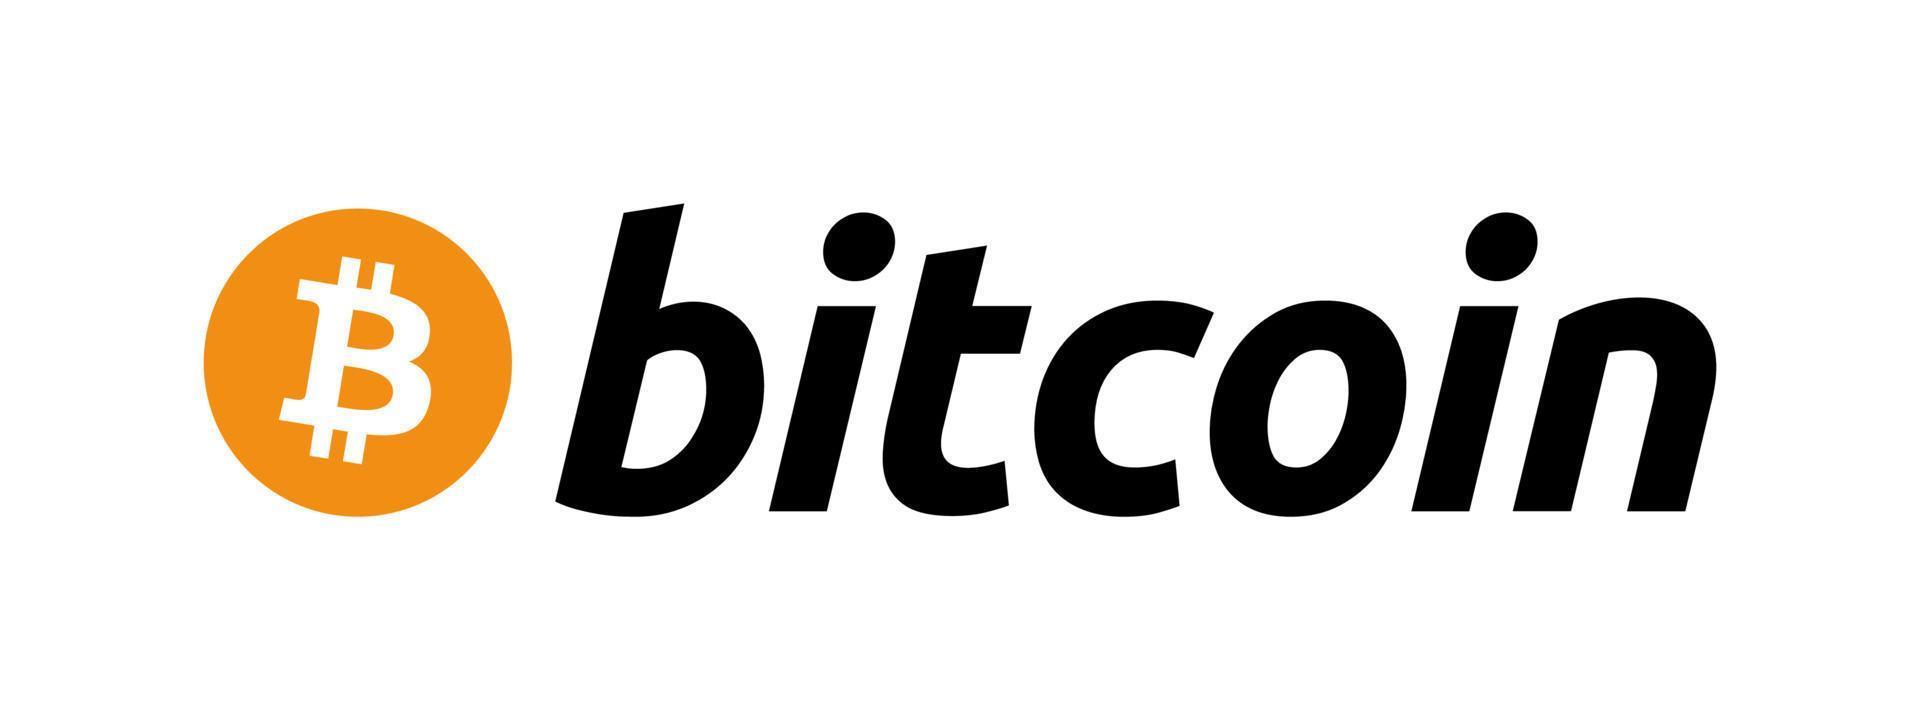 Bitcoin-Logo-Vektor, freier Vektor des Bitcoin-Symbols